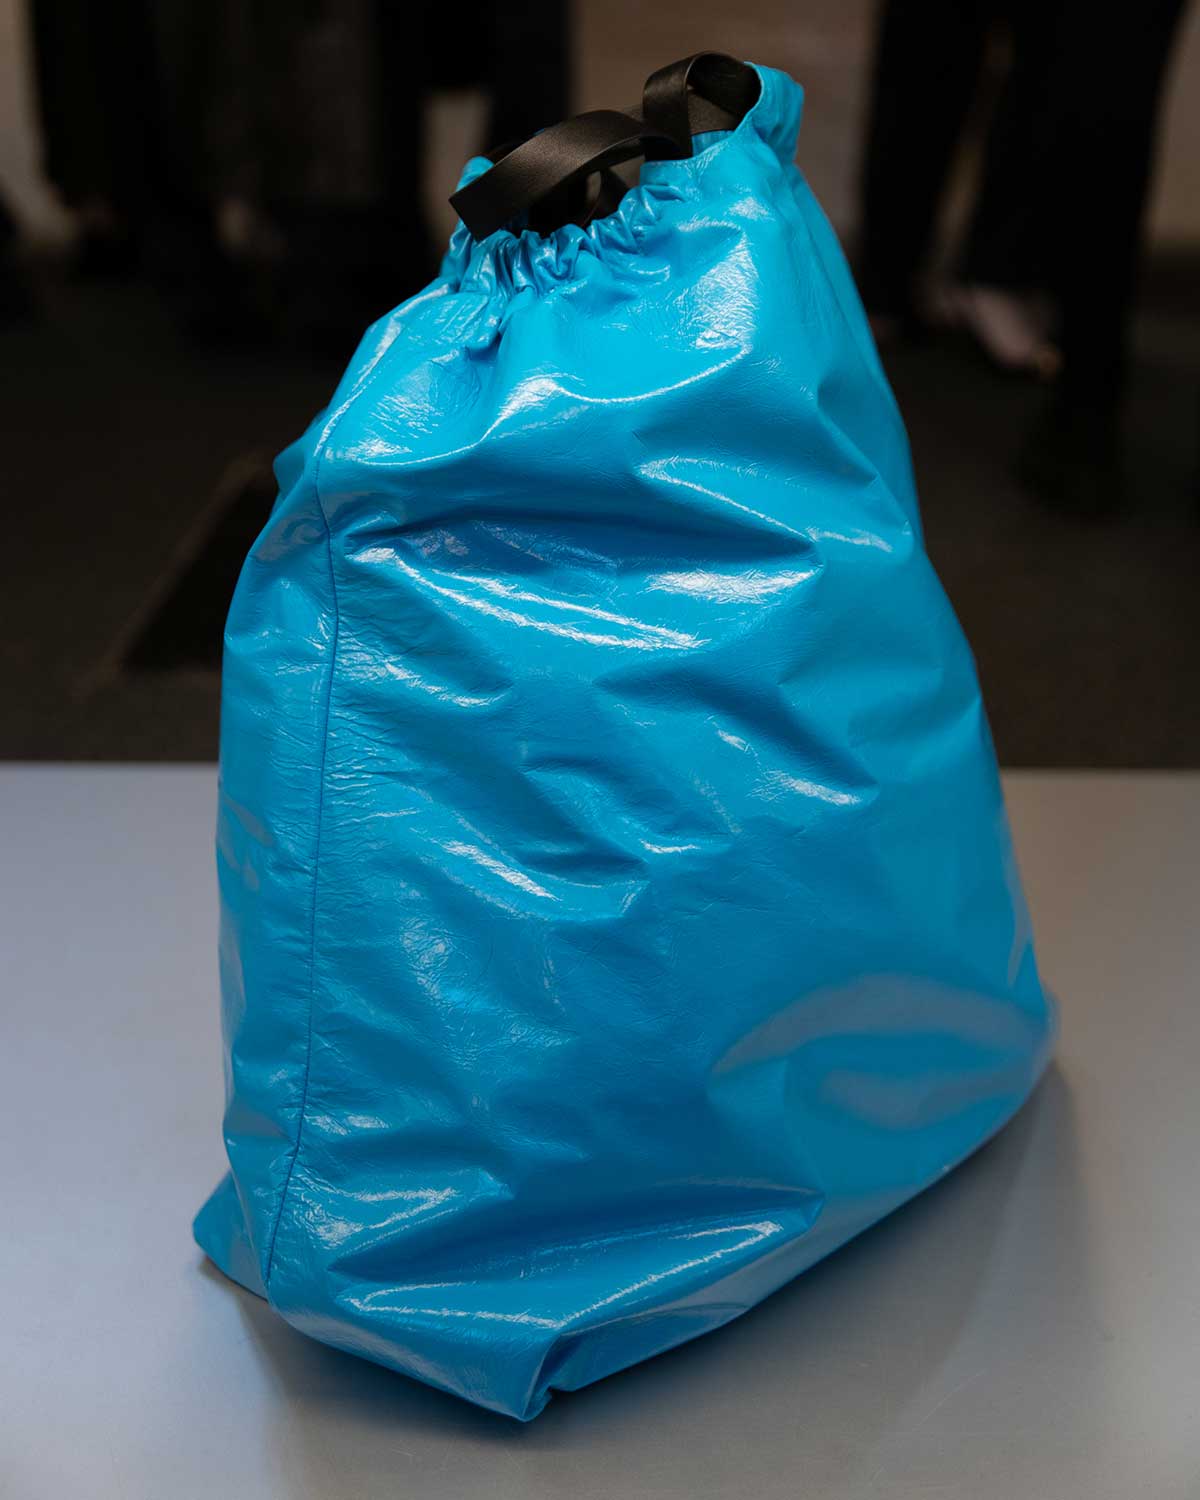 A literal trash bag”: Balenciaga's Newest Bag Garners Heavy Criticism  Online